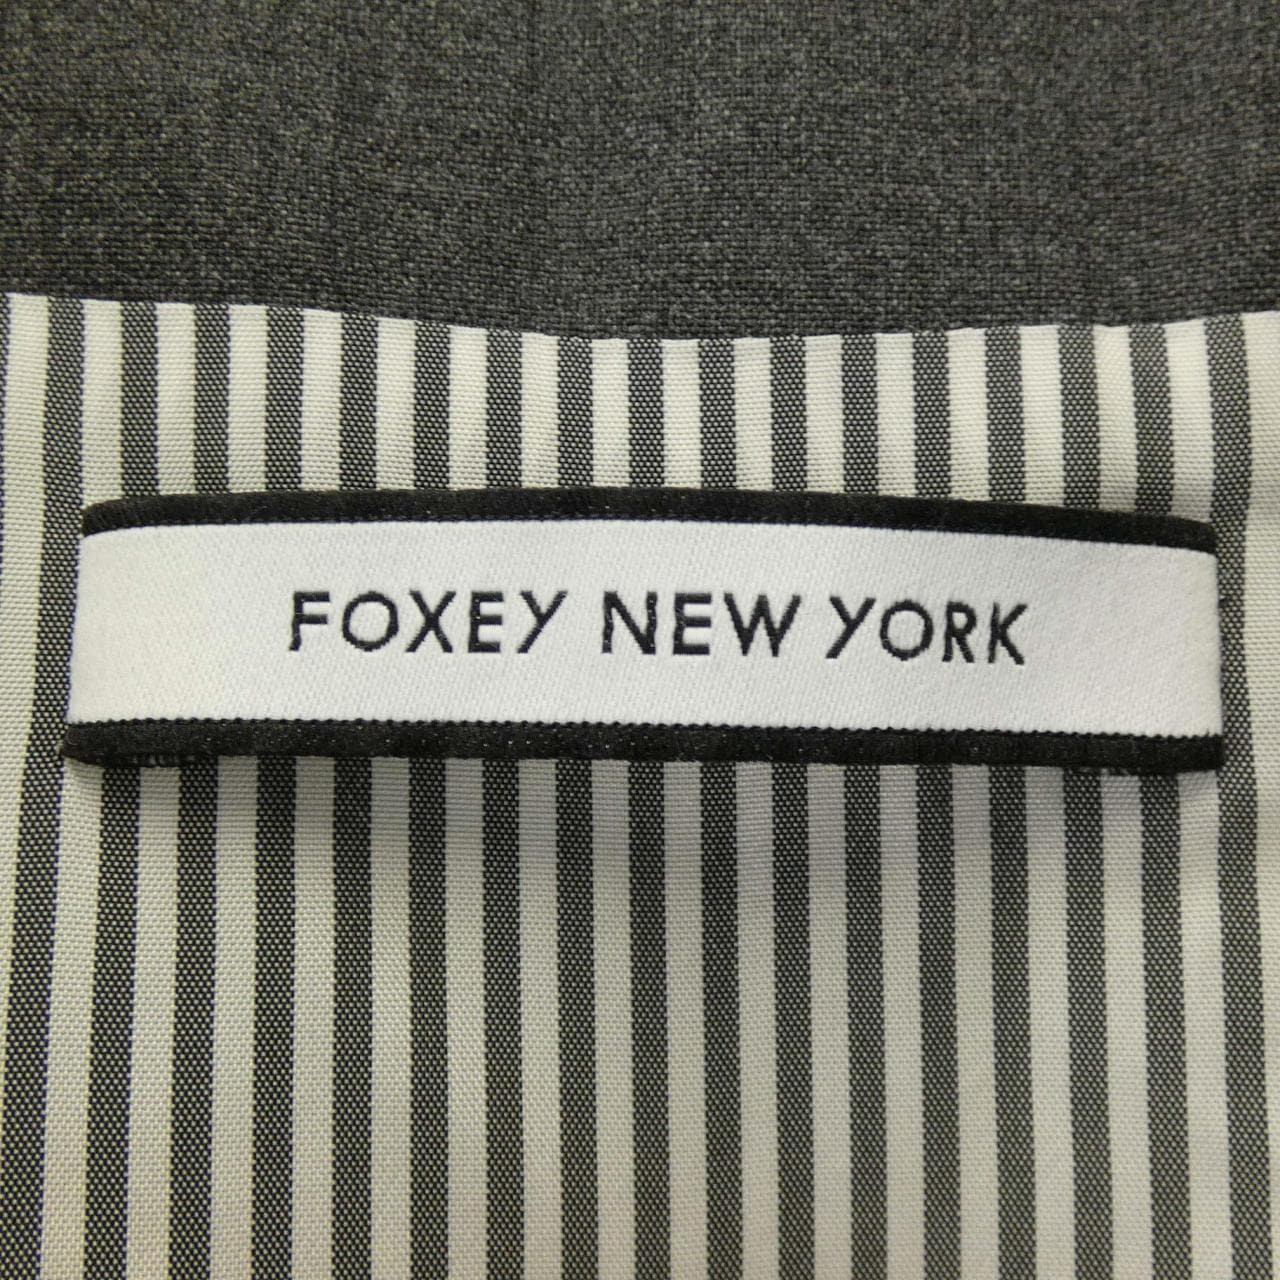 FOXEY NEW YORK FOXEY NEW YORK down coat